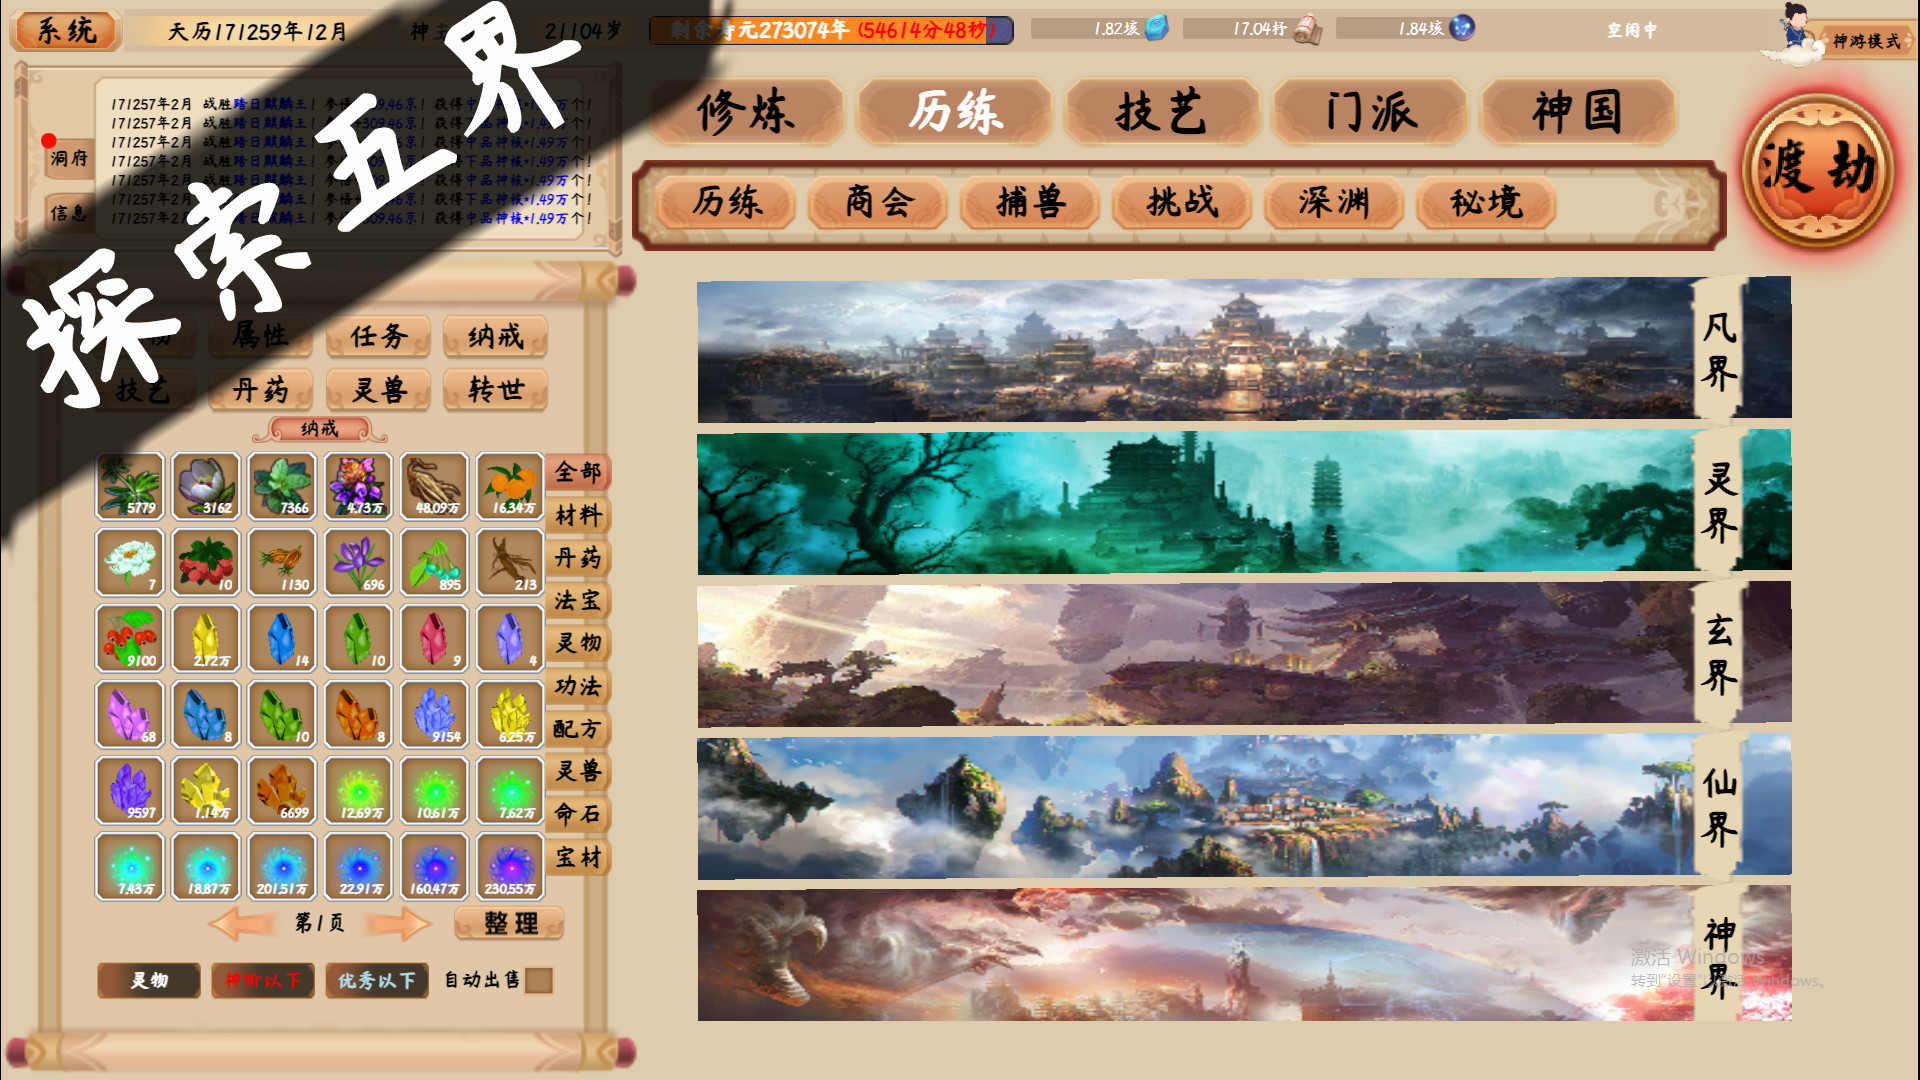 xiuzhen idle Featured Screenshot #1